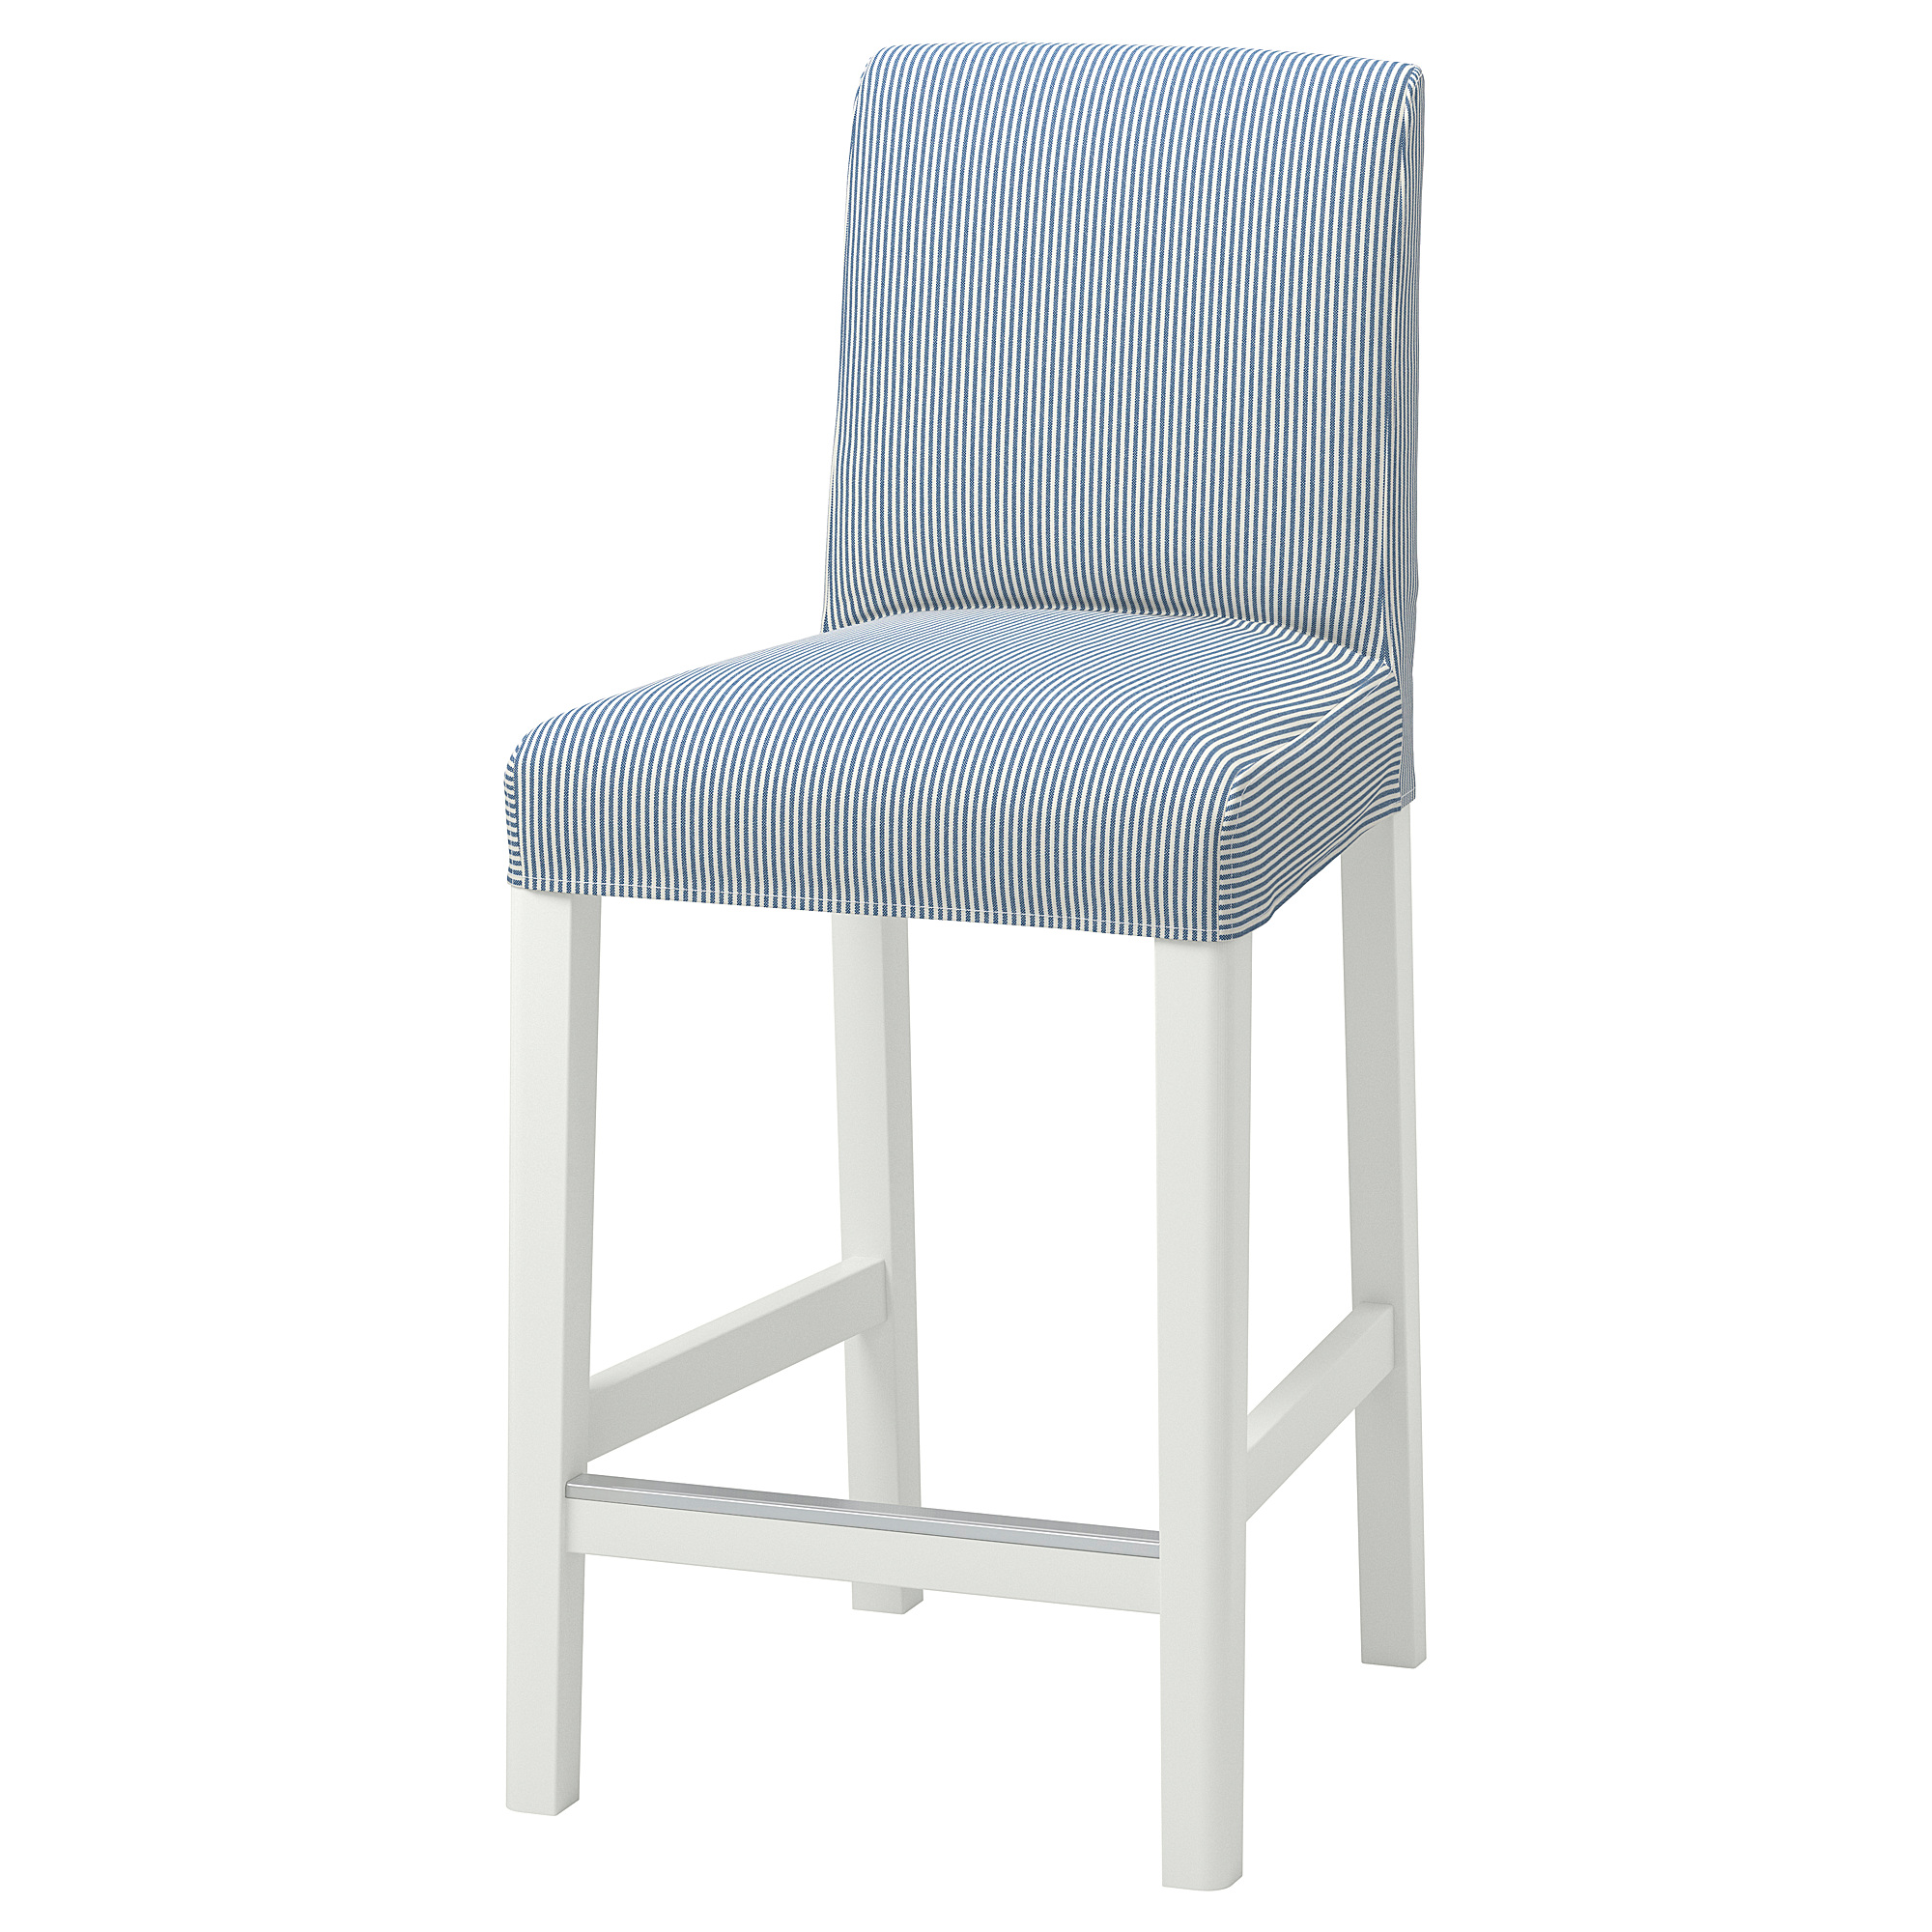 BERGMUND cover for bar stool with backrest